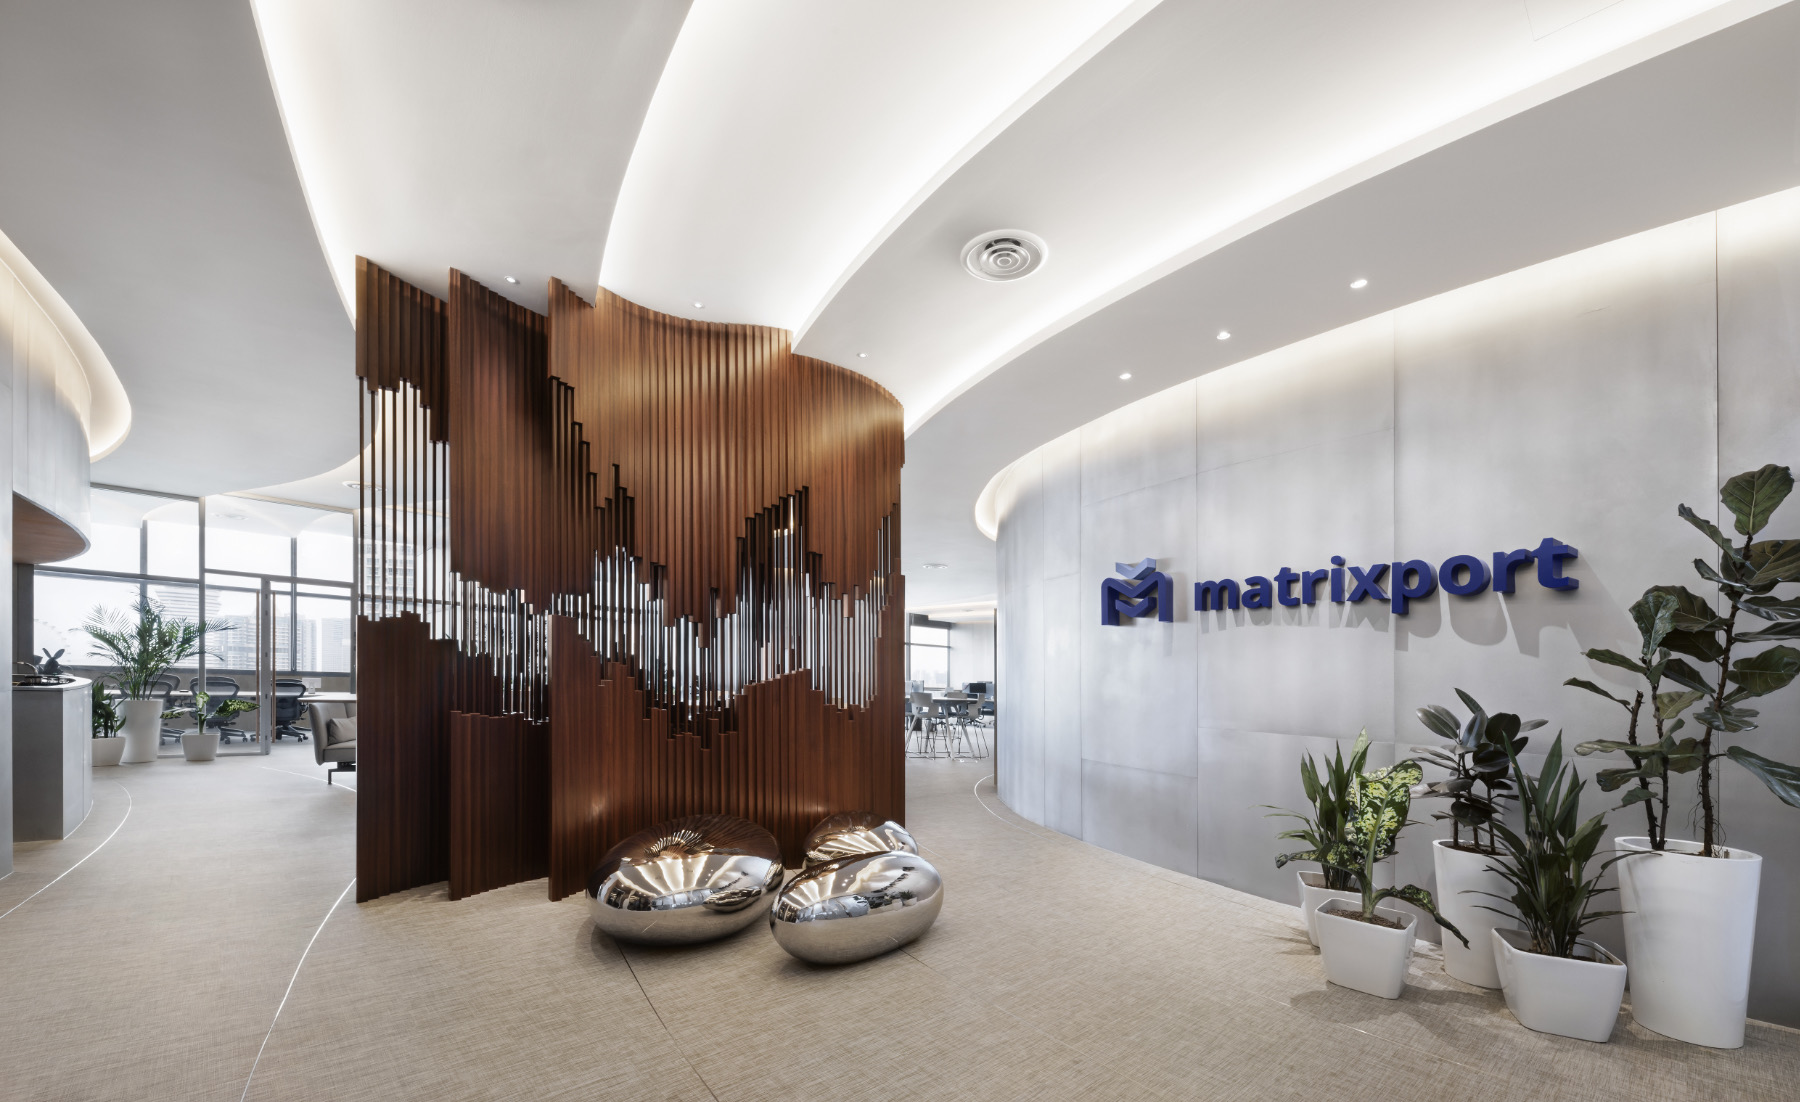 A Look Inside Matrixport’s New Singapore Office